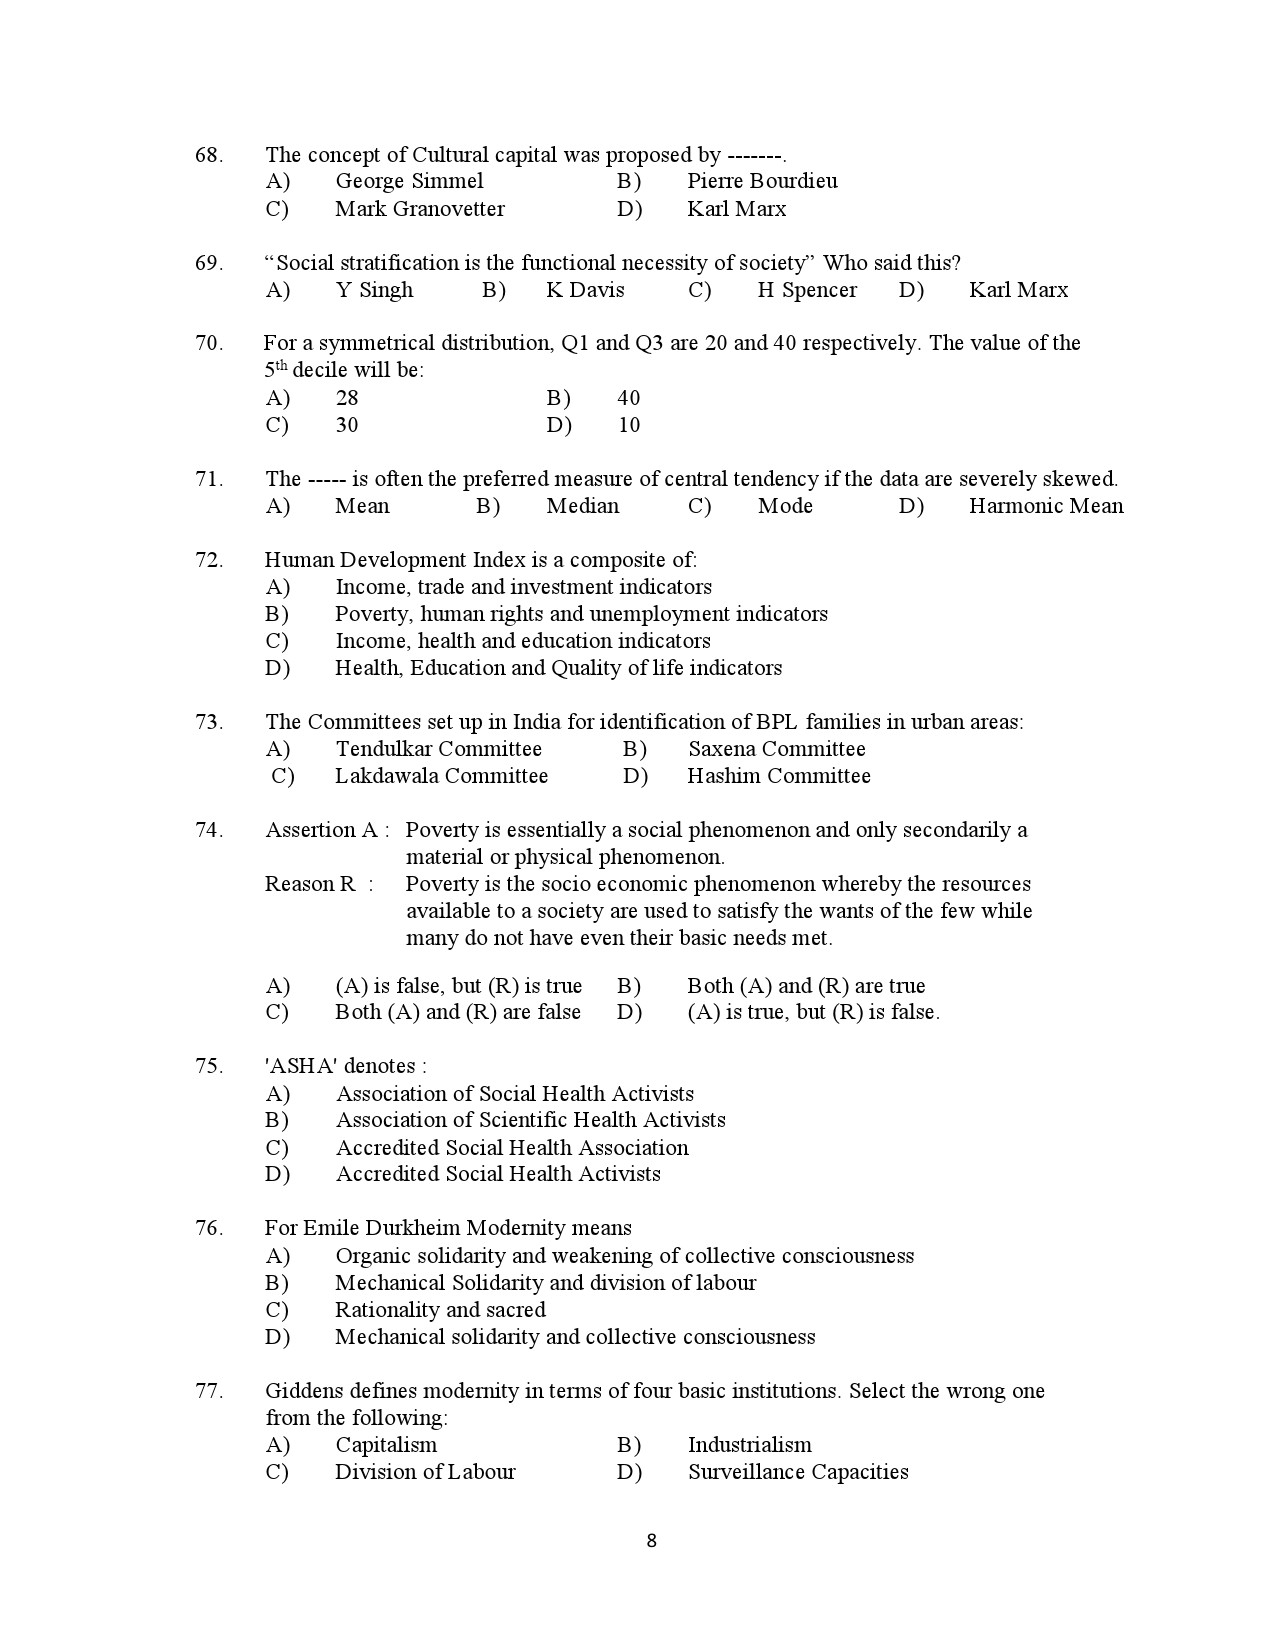 Kerala SET Sociology Exam Question Paper July 2021 8